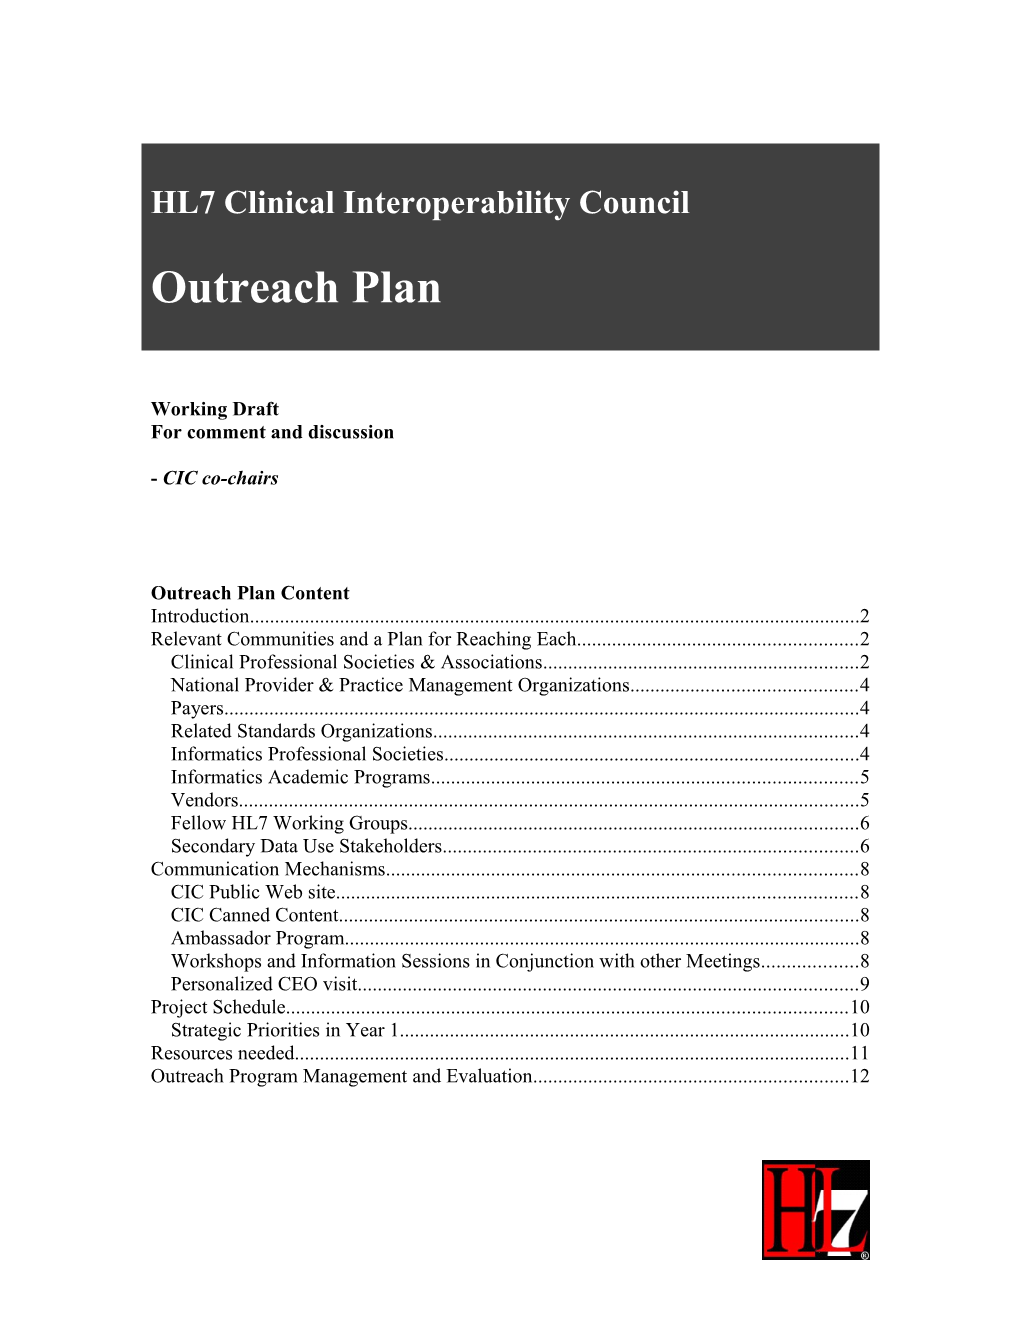 HL7 Clinical Interoperability Council Outreach Plan